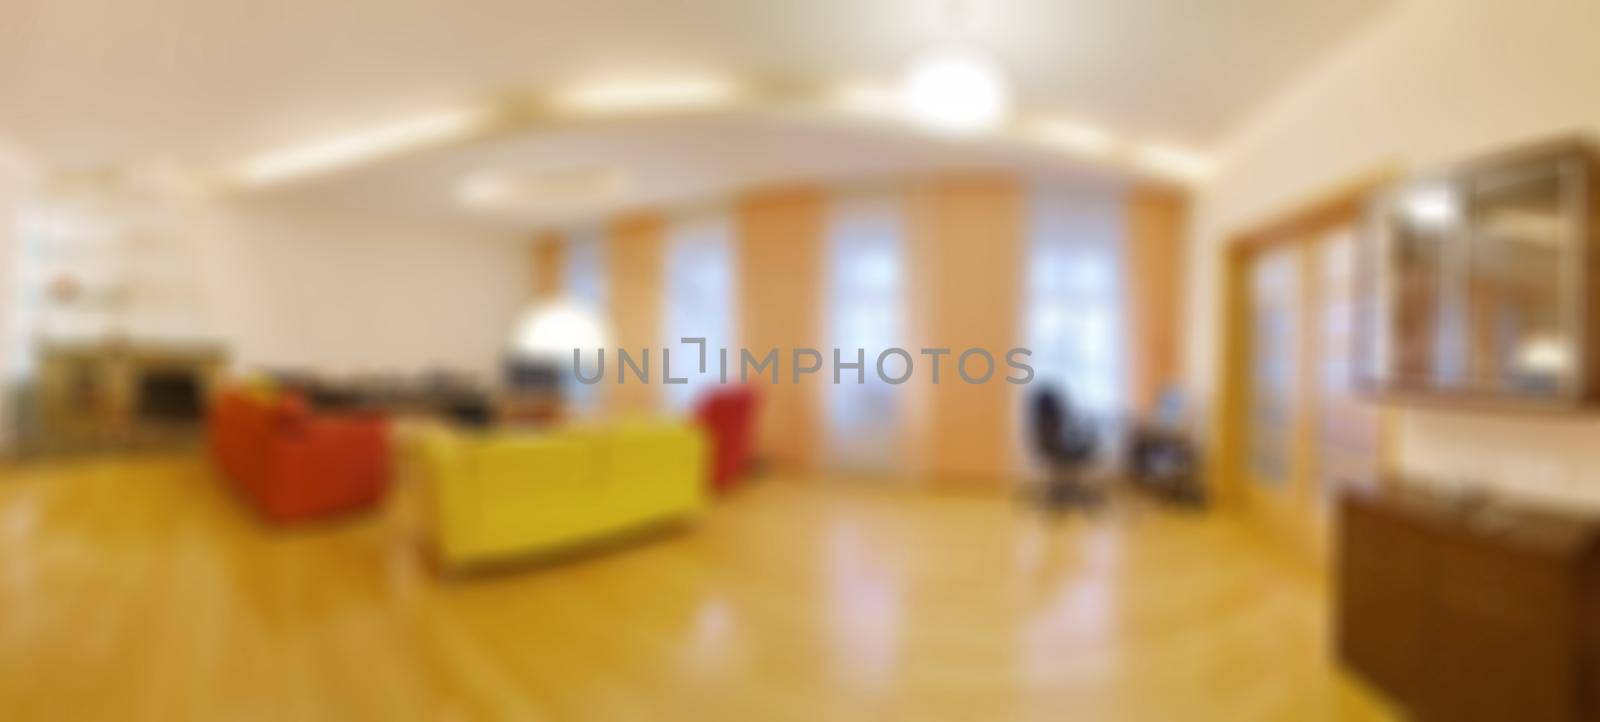 Living room blur background by nikitabuida